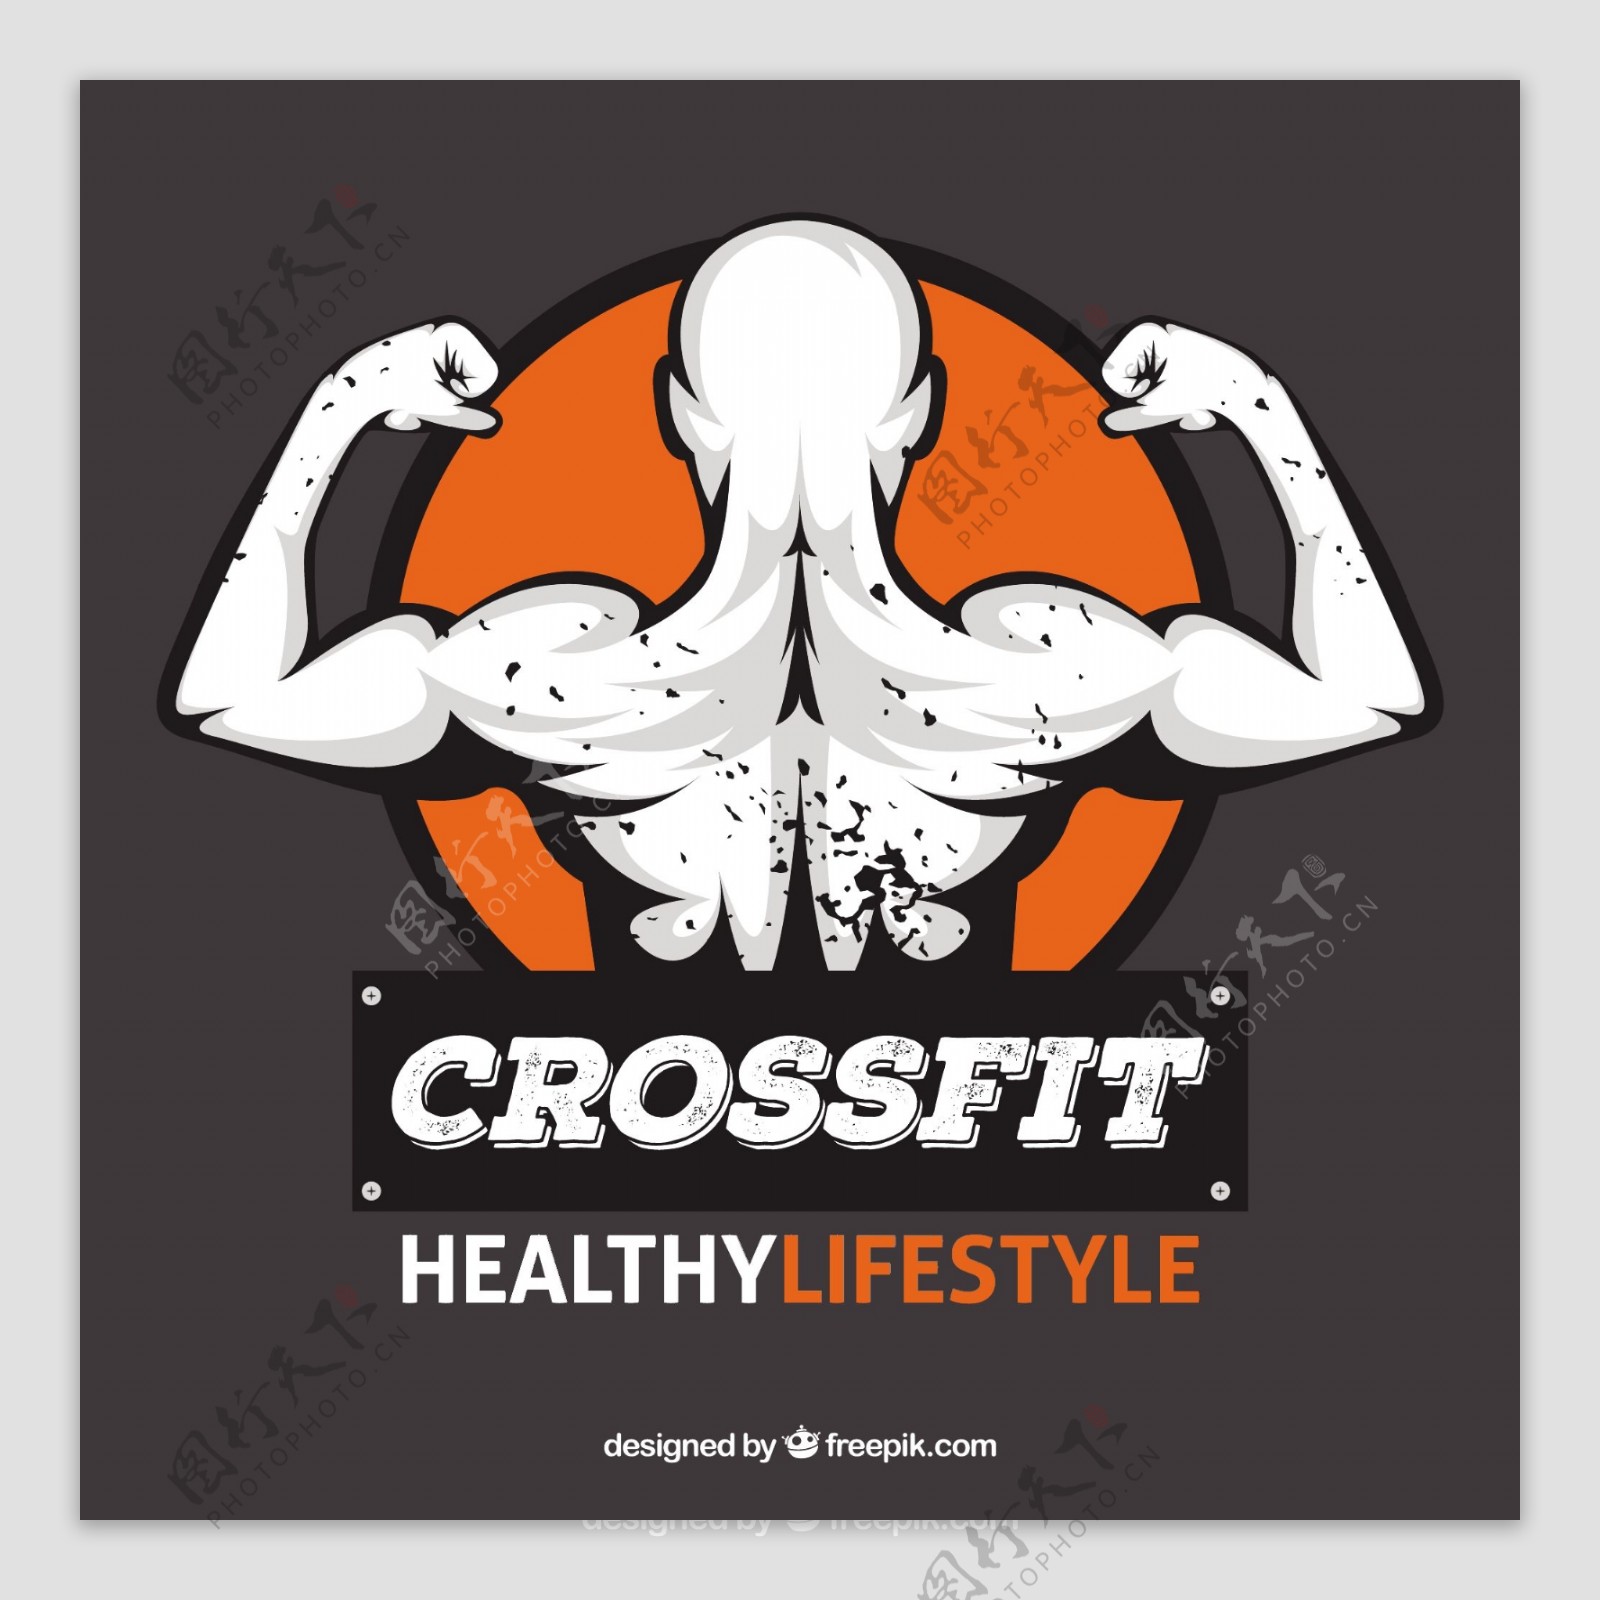 CrossFit的背景与说明